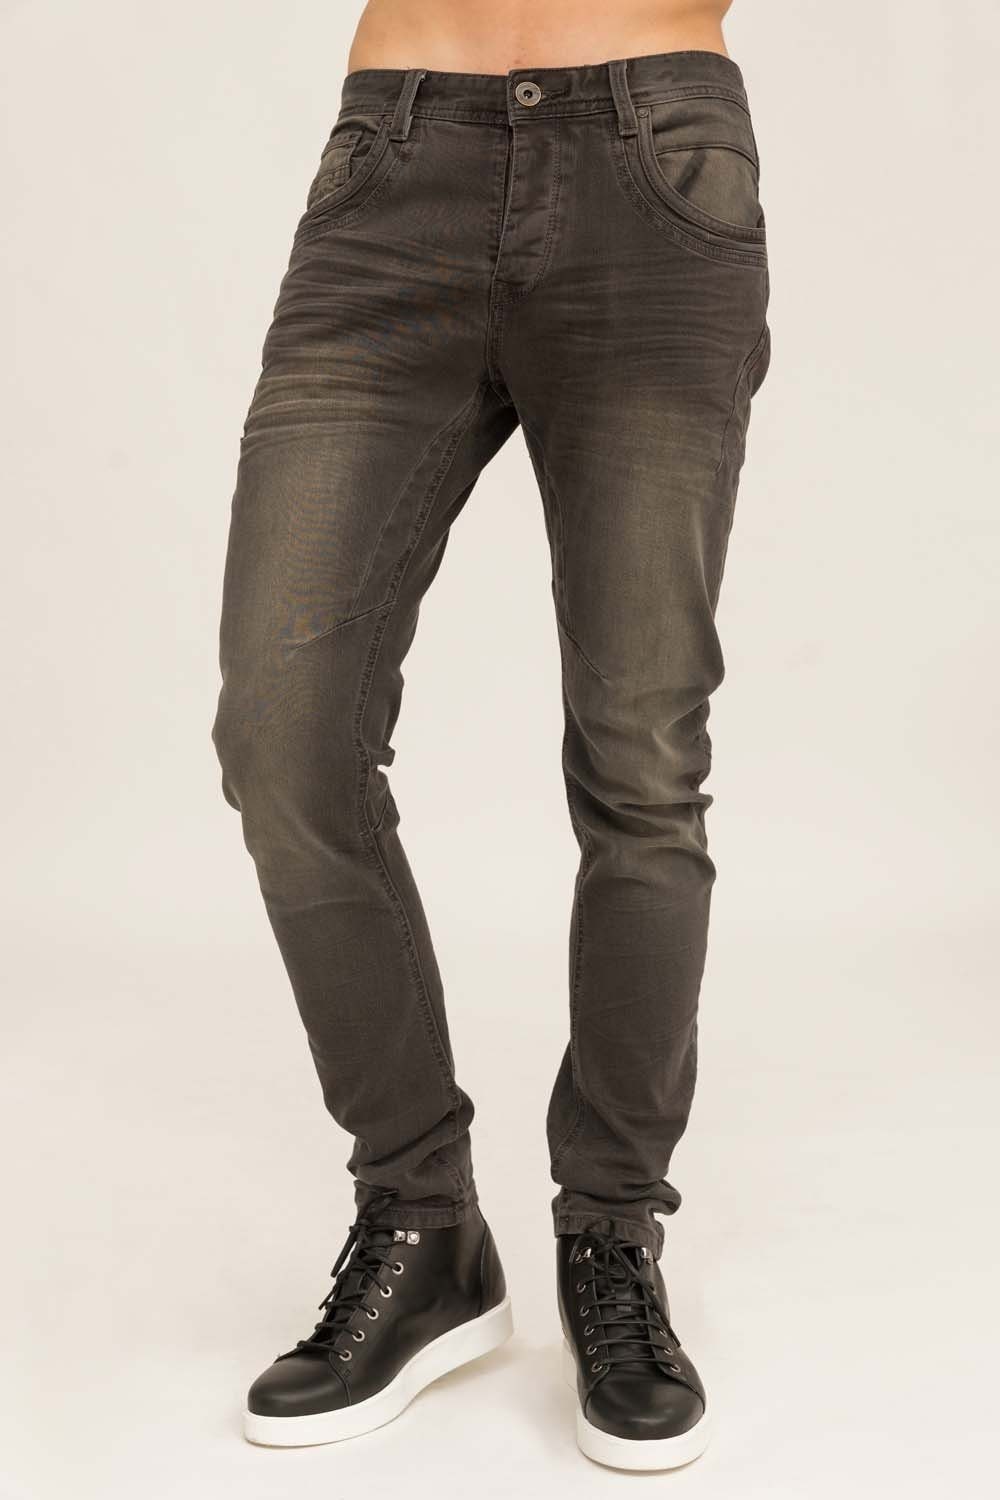 Otto - Trueprodigy NU 15% KORTING: trueprodigy Tapered Fit-jeans Vex #603